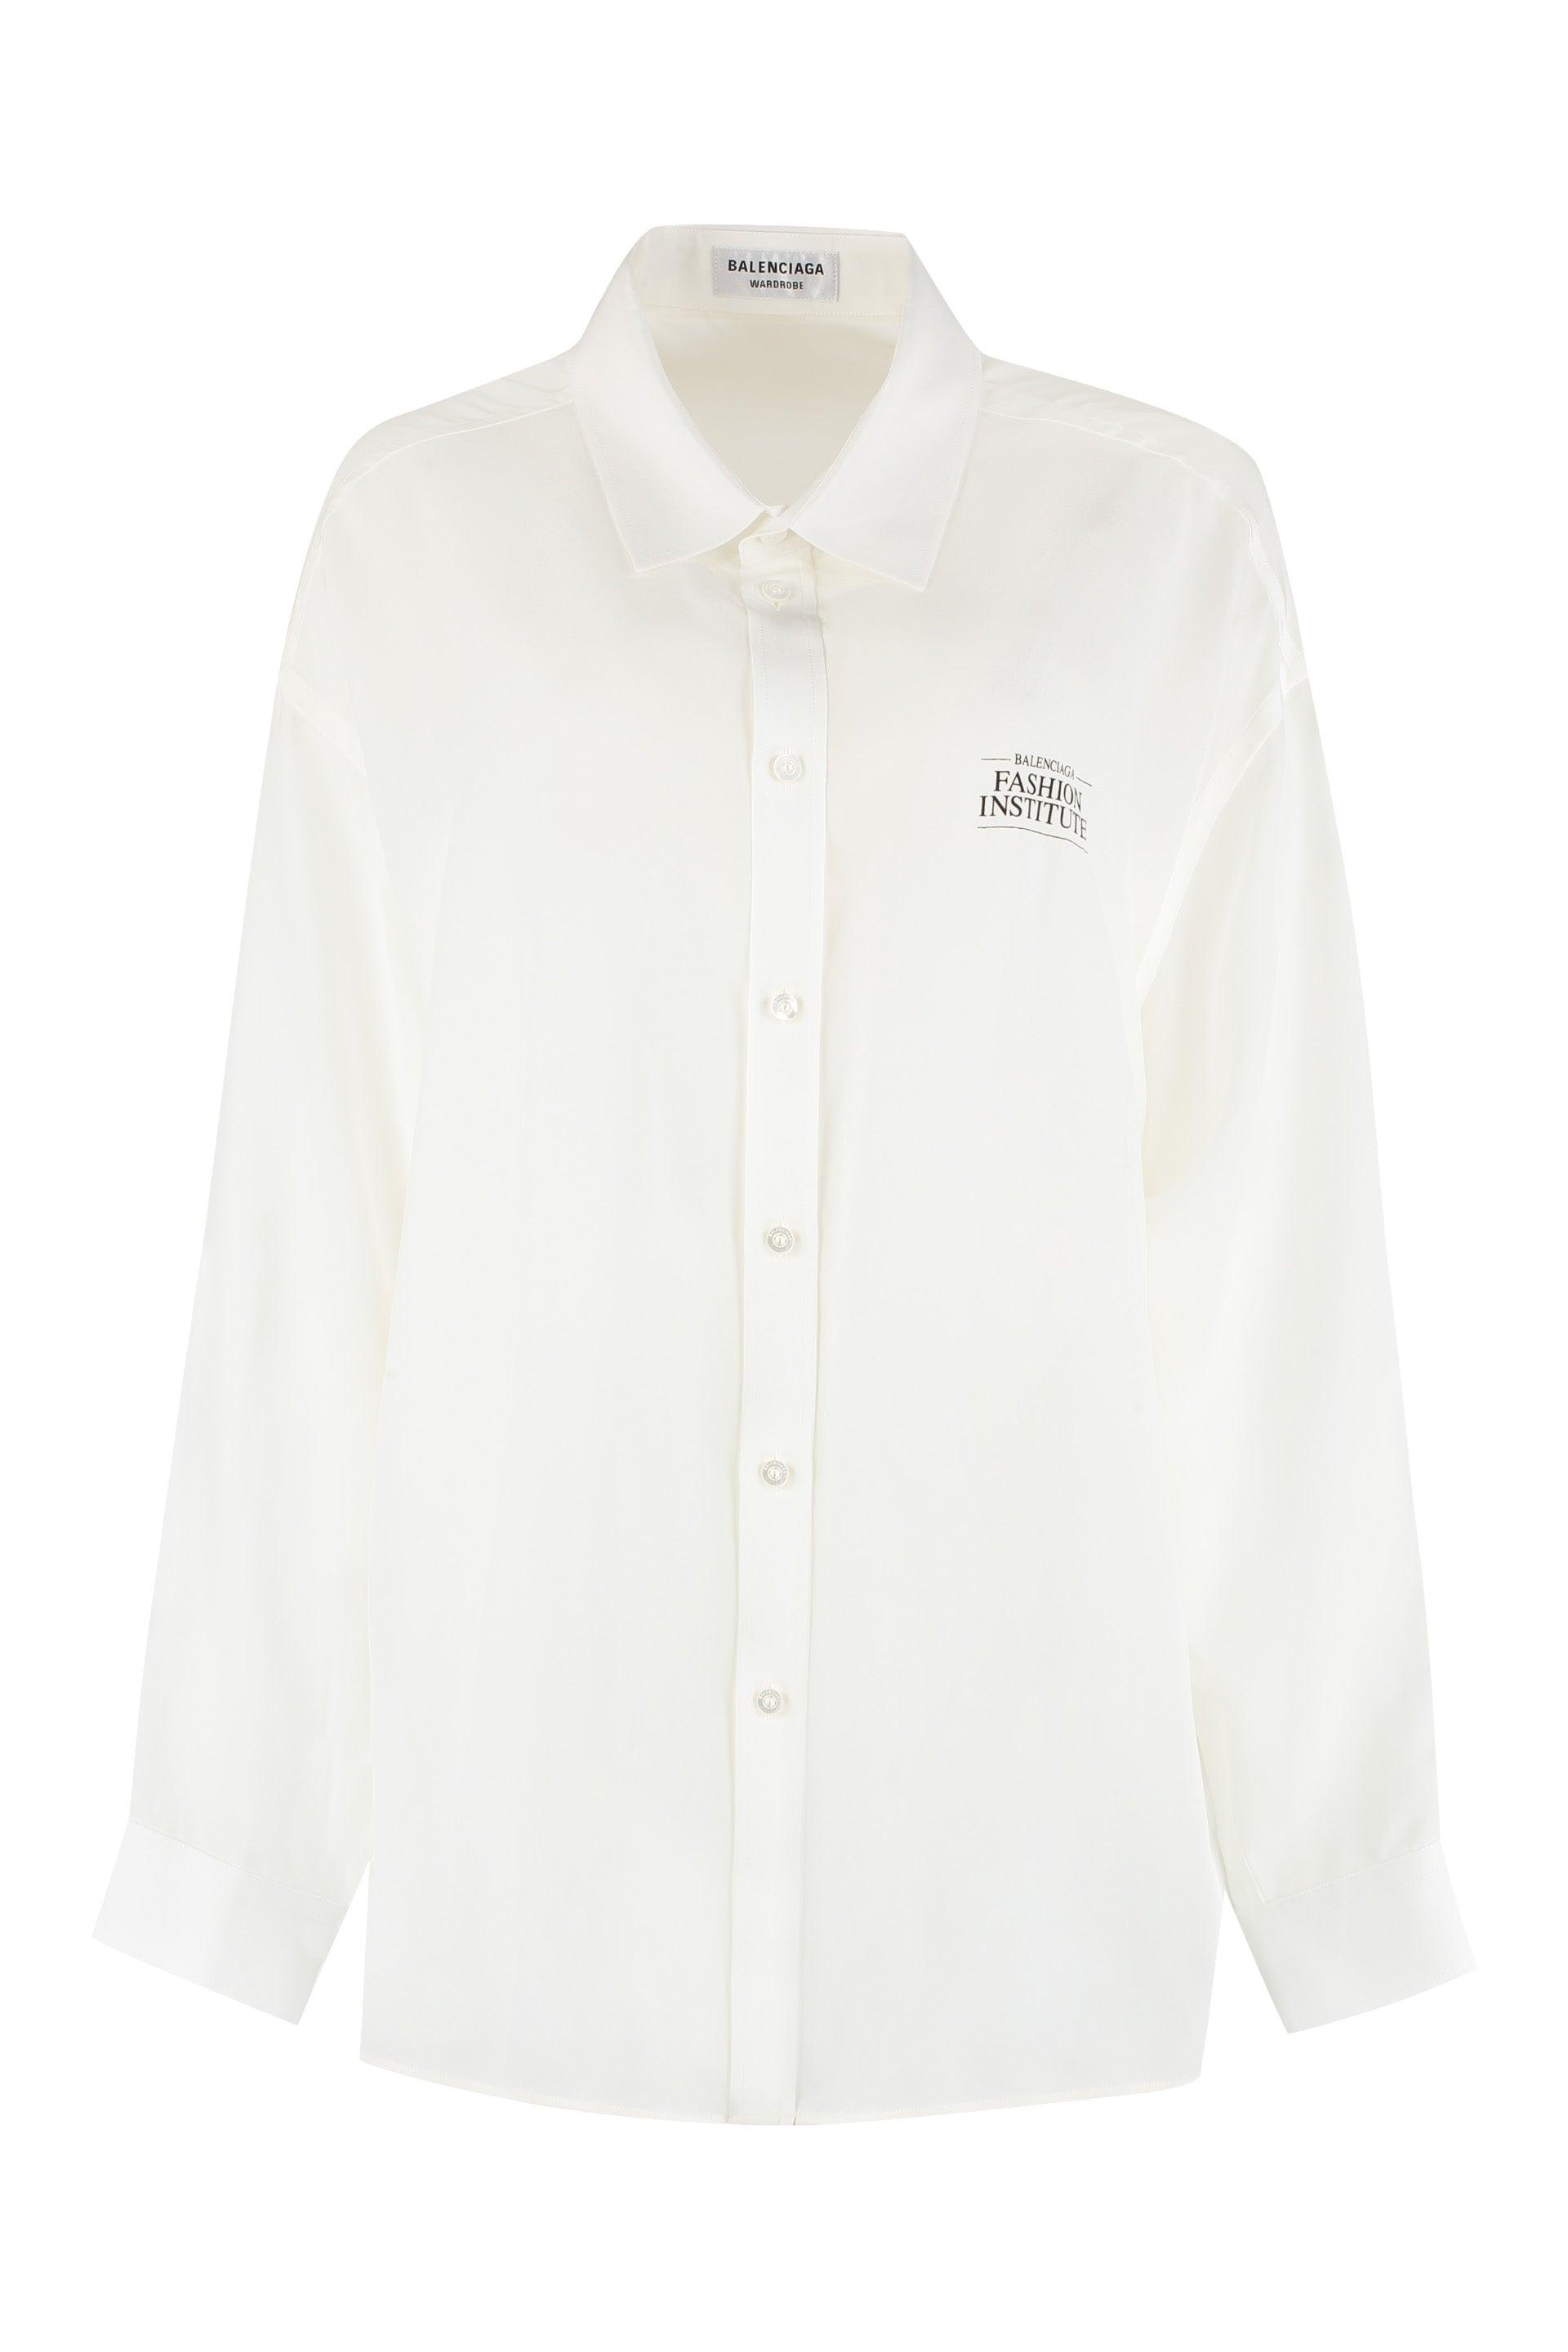 Balenciaga Logo Silk Shirt in White